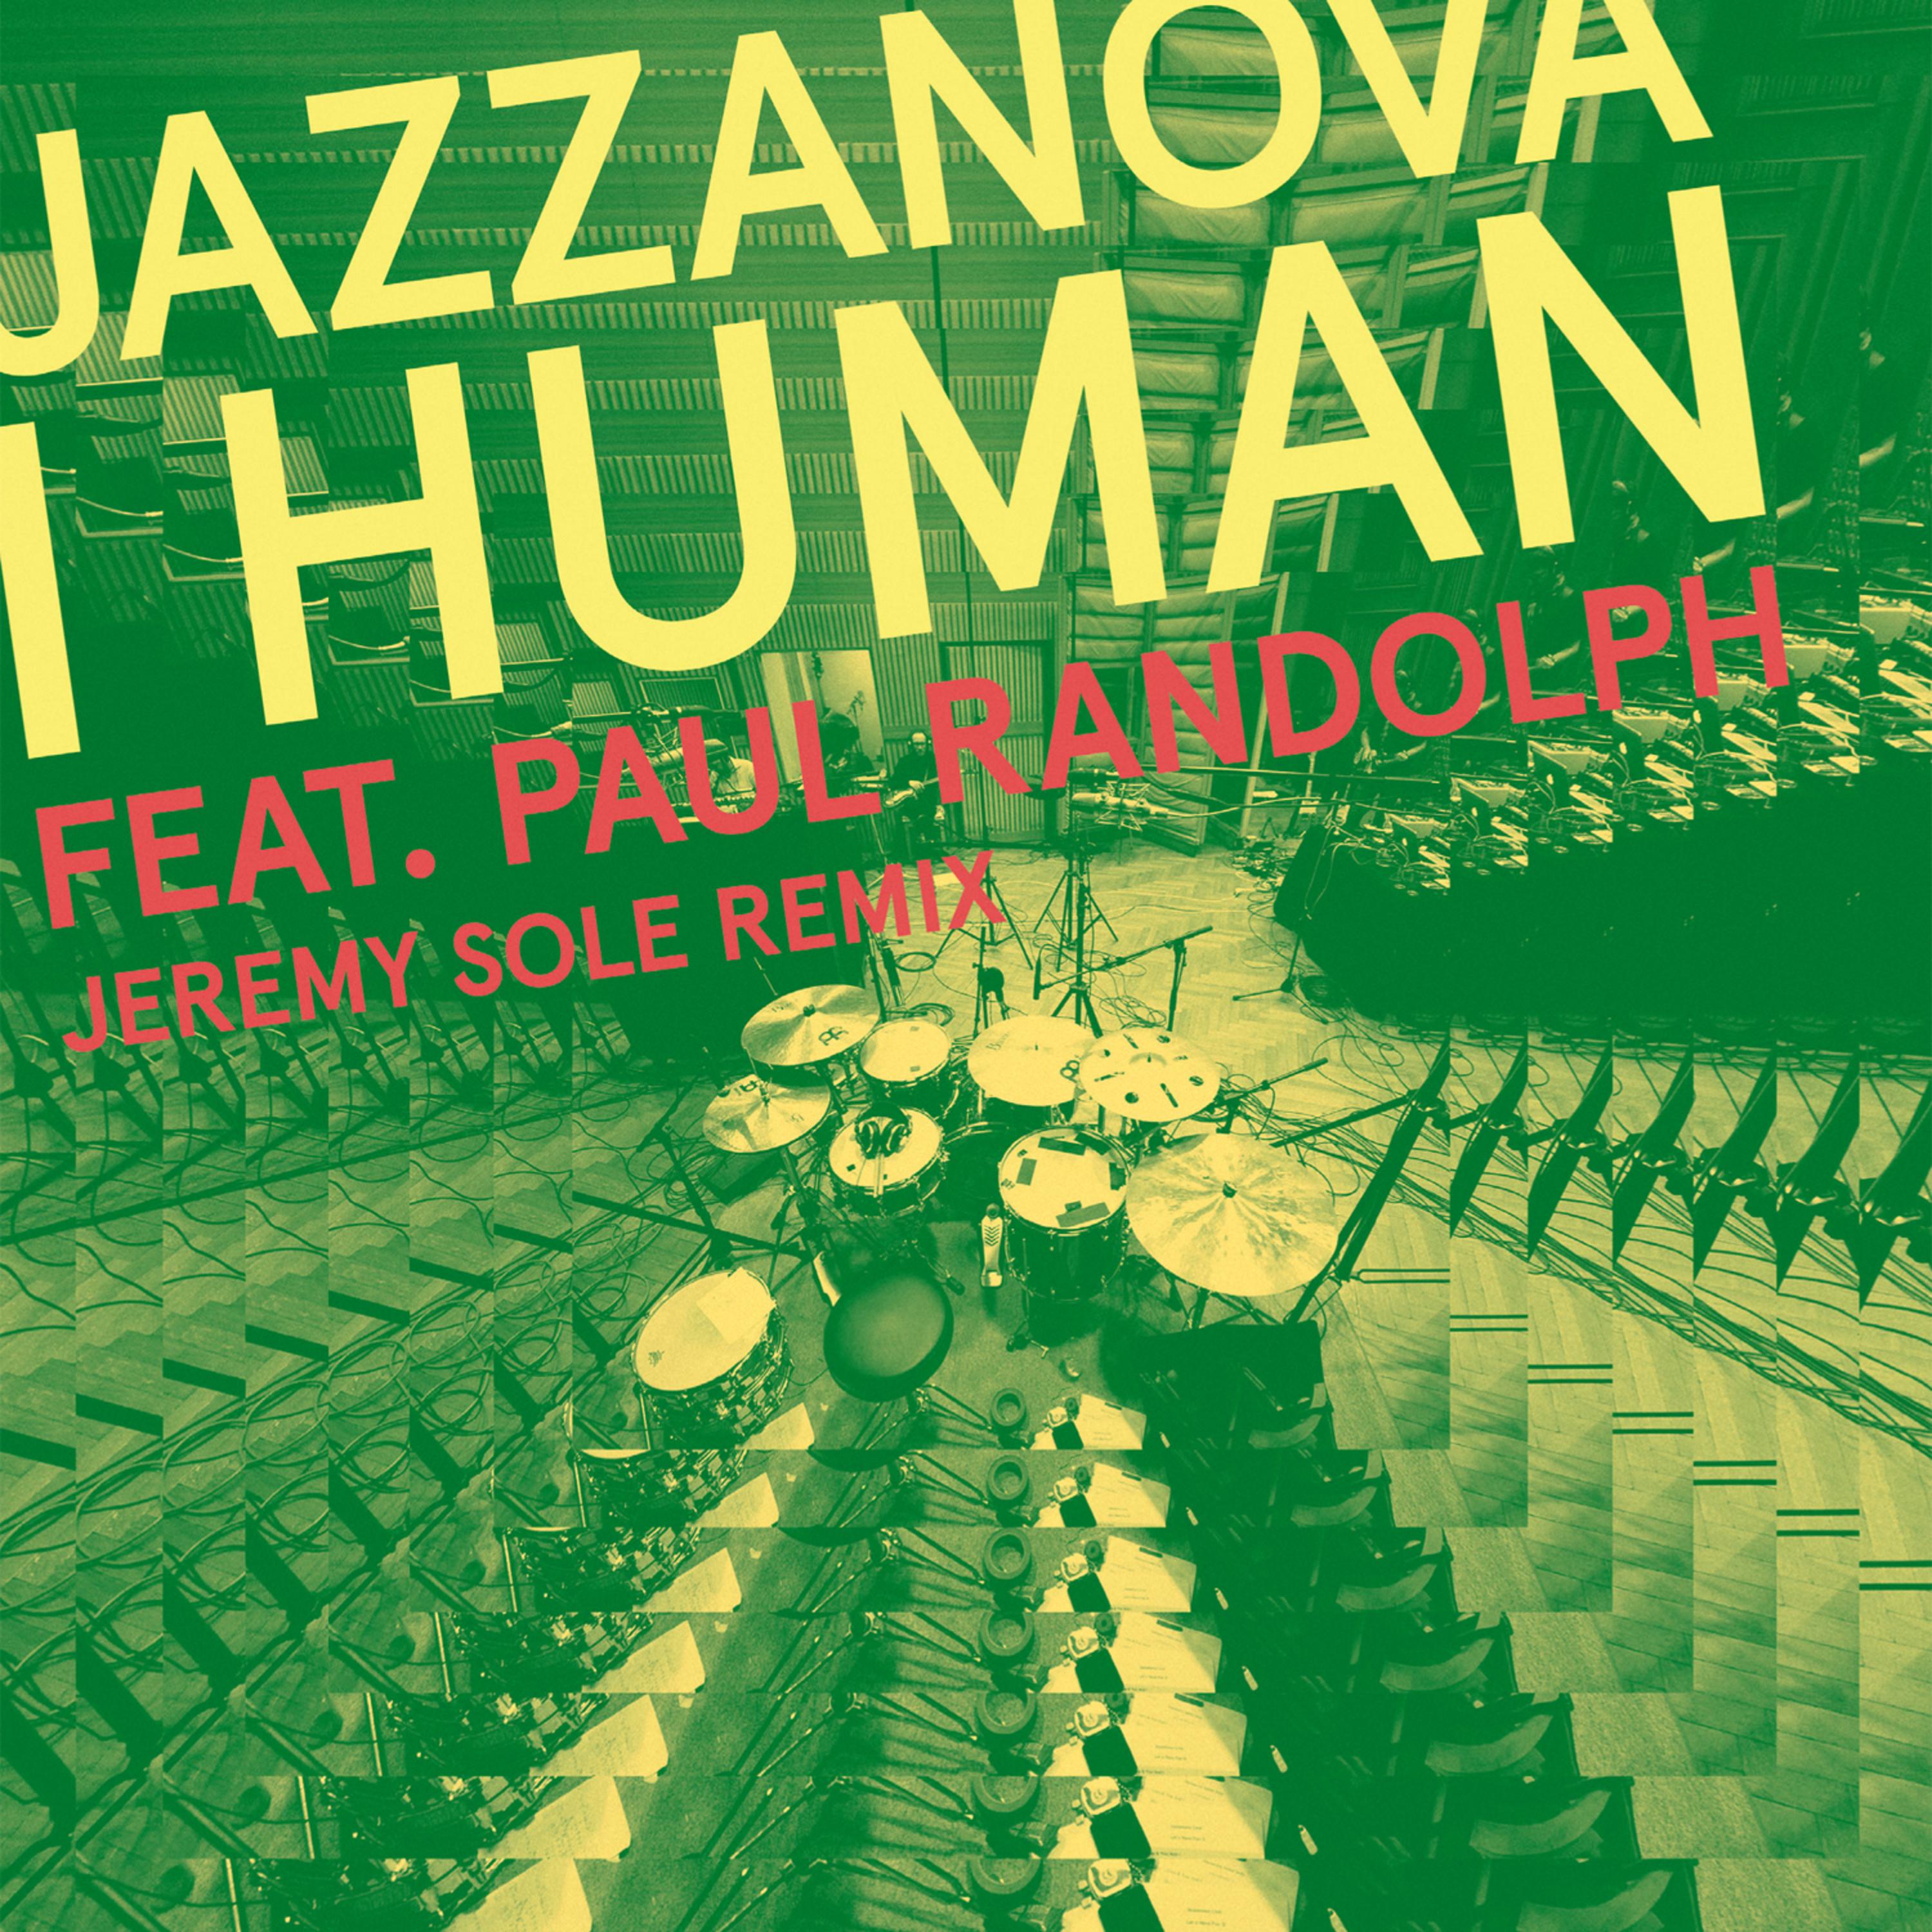 I Human feat. Paul Randolph (Jeremy Sole Remix)专辑